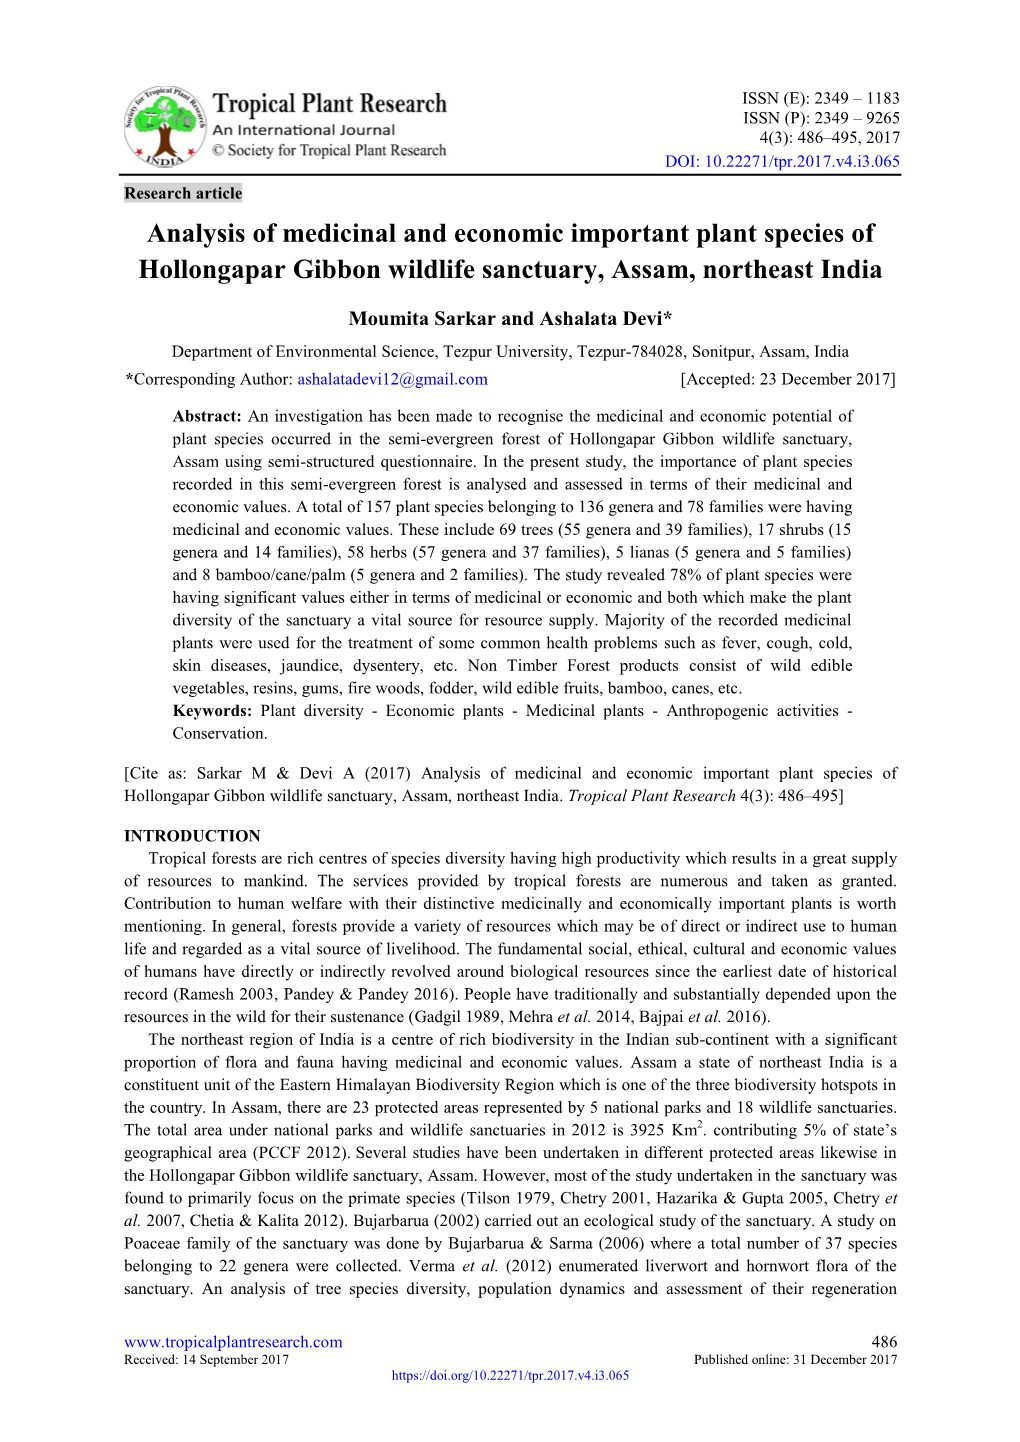 Analysis of Medicinal and Economic Important Plant Species of Hollongapar Gibbon Wildlife Sanctuary, Assam, Northeast India